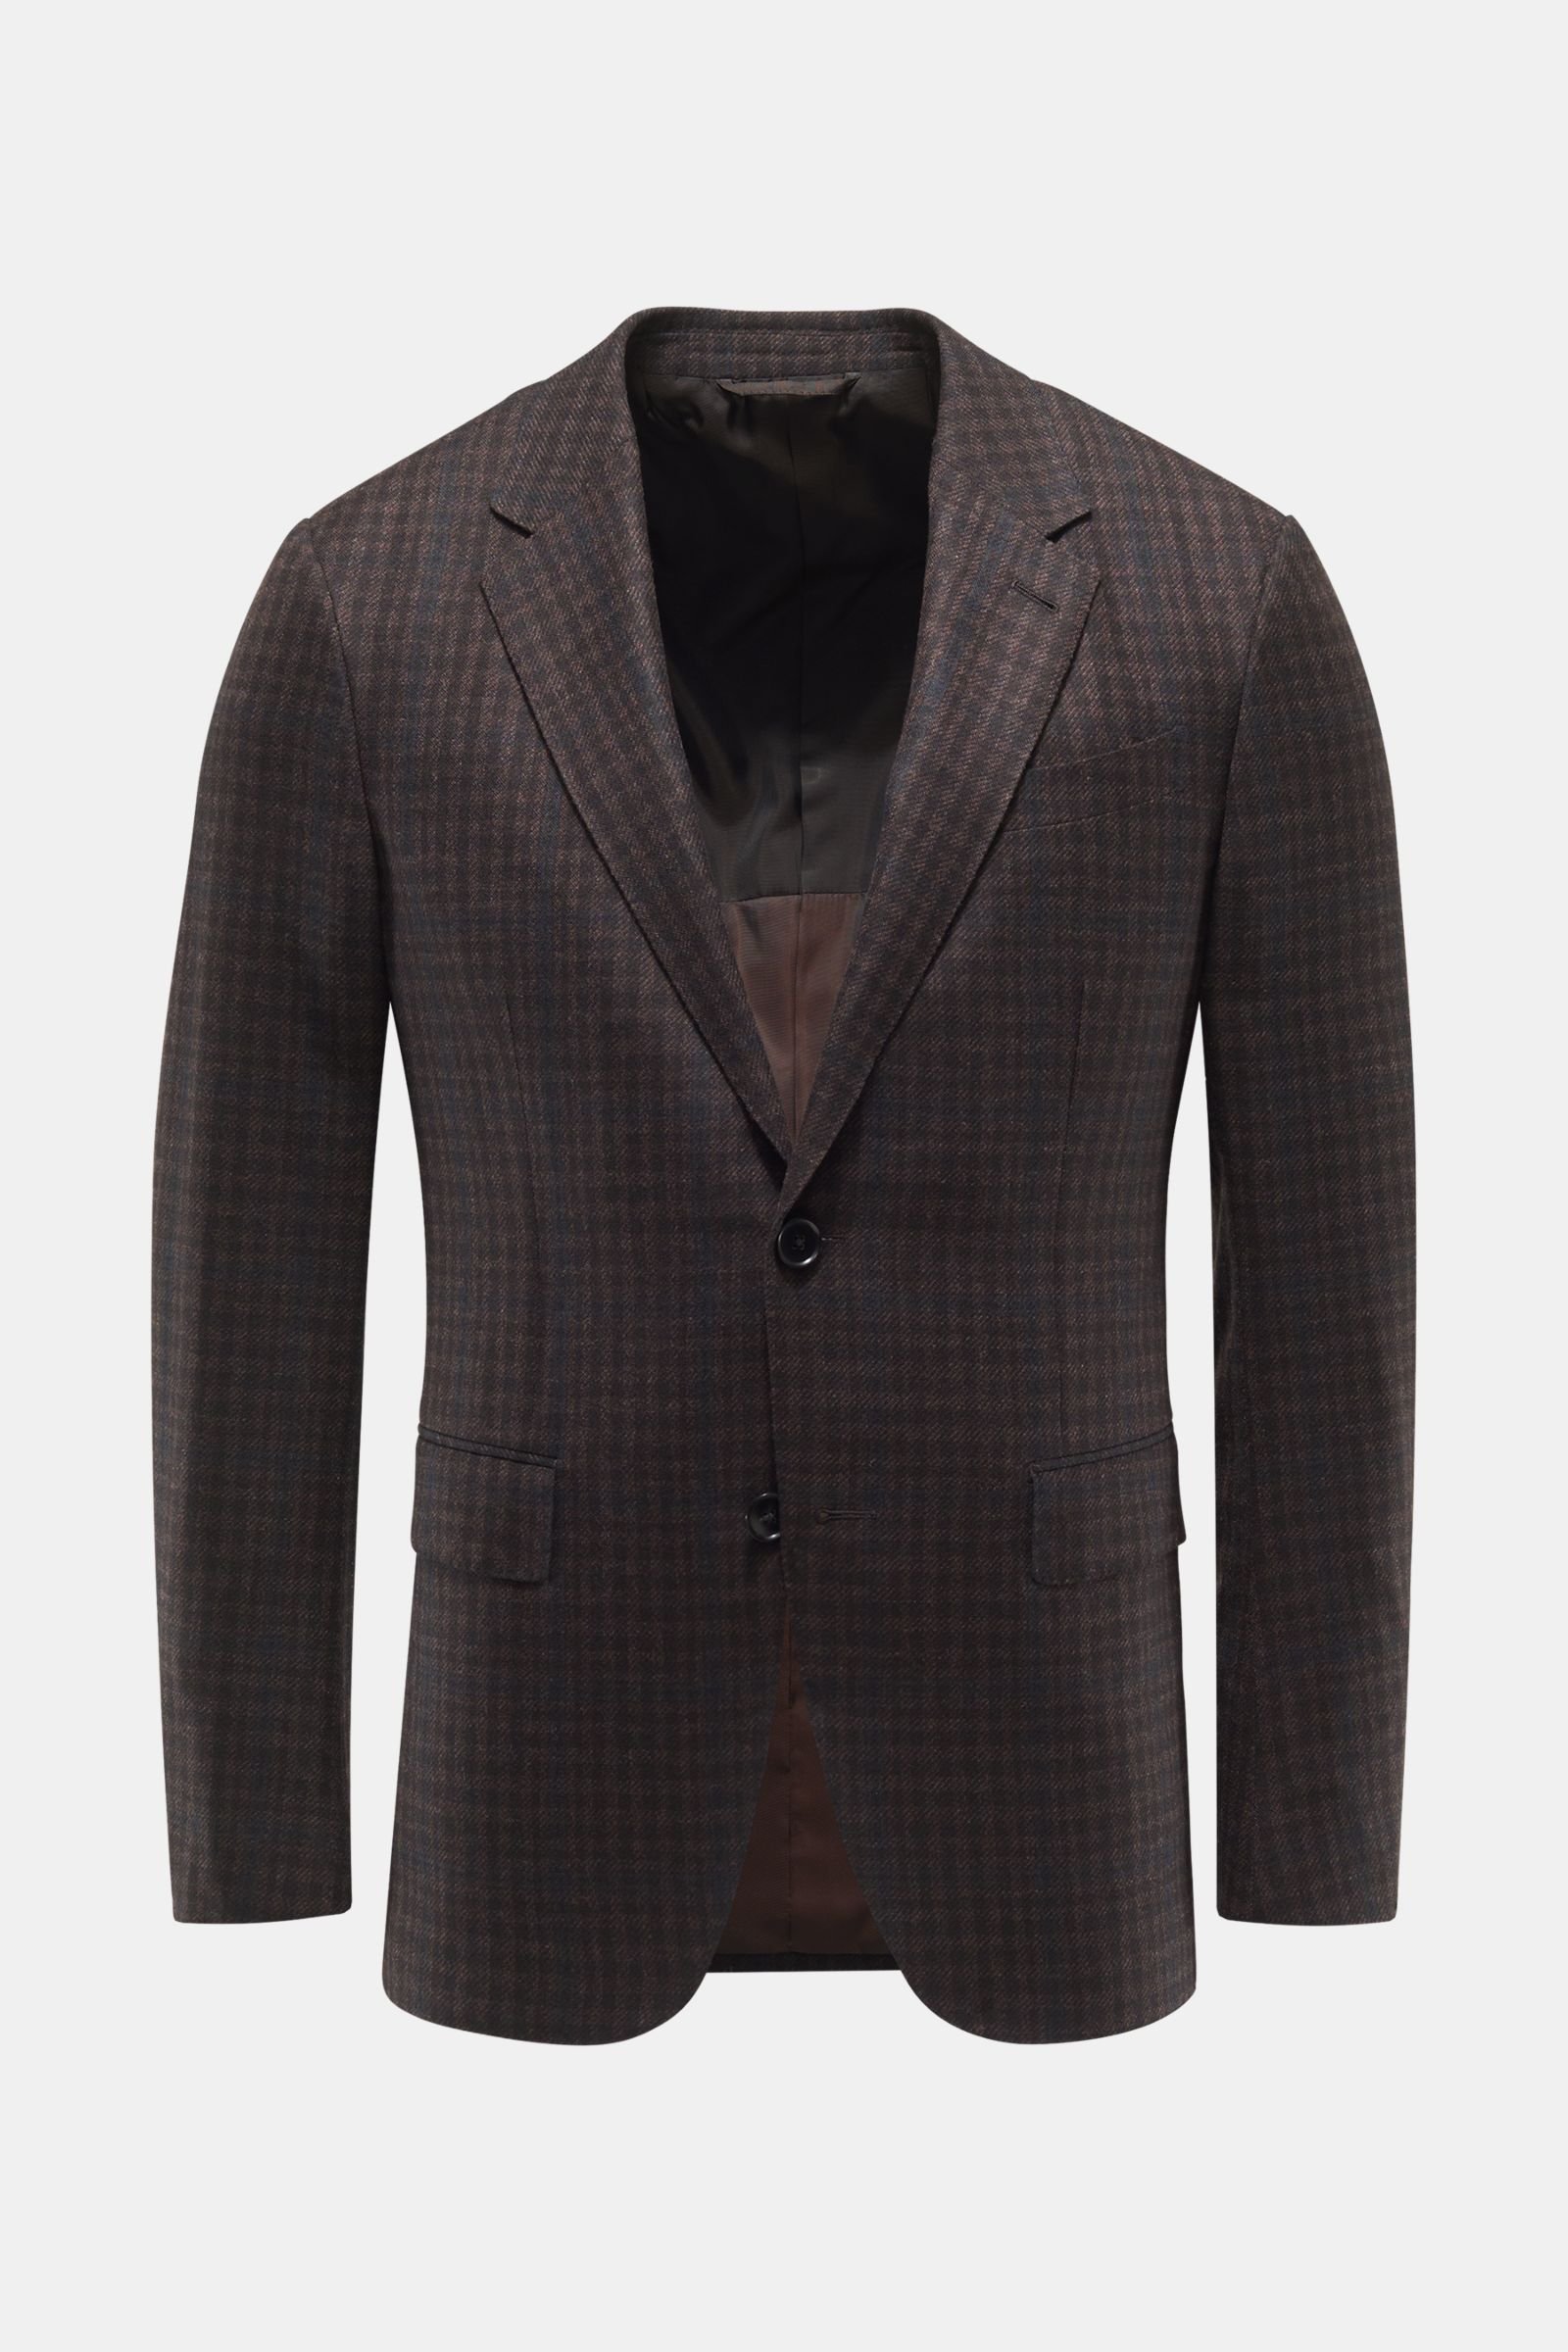 ERMENEGILDO ZEGNA smart-casual jacket dark brown checked | BRAUN Hamburg